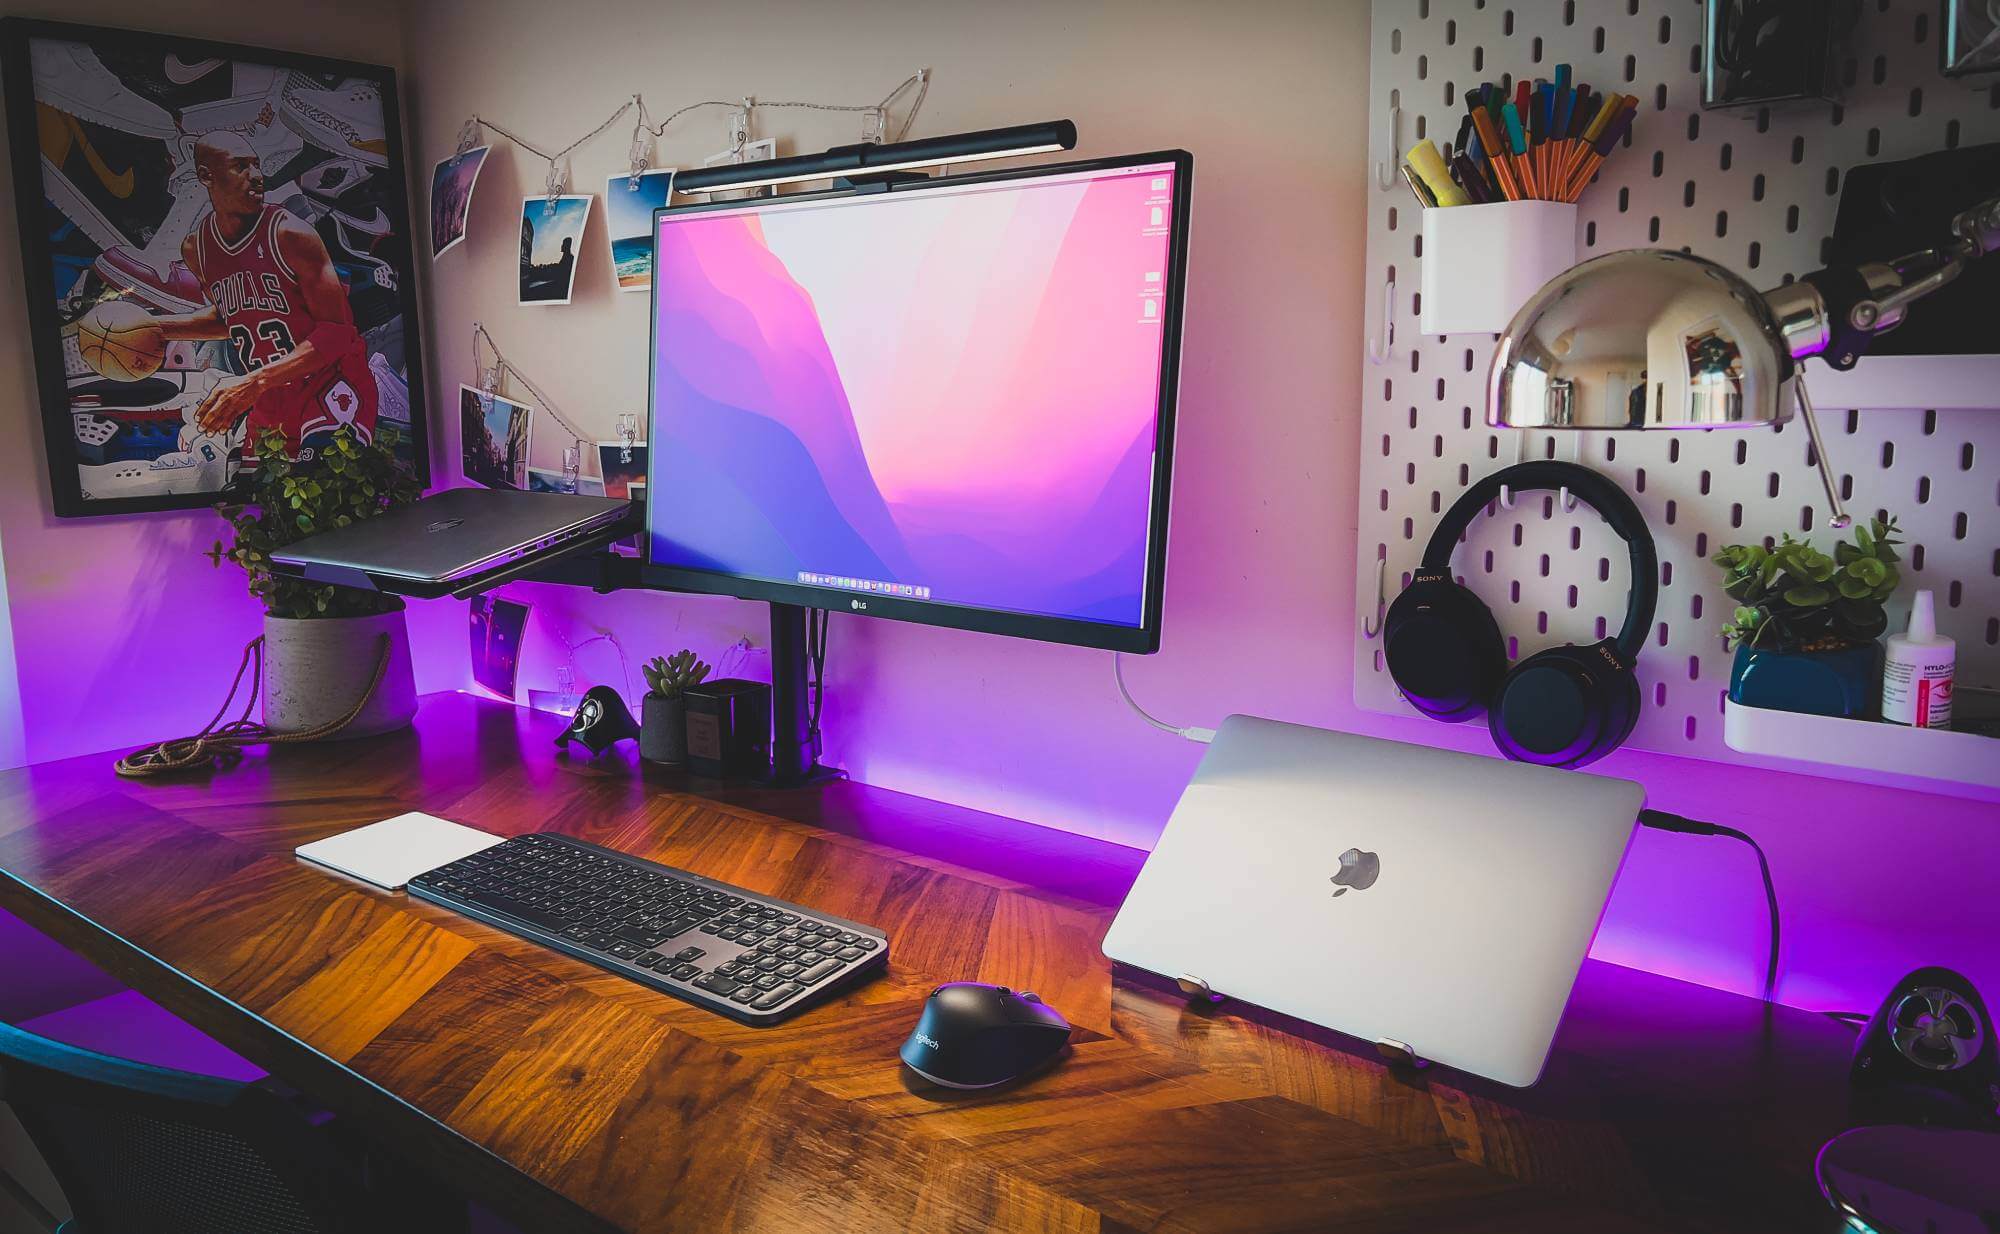 A productive desk setup with a BenQ screenbar monitor light